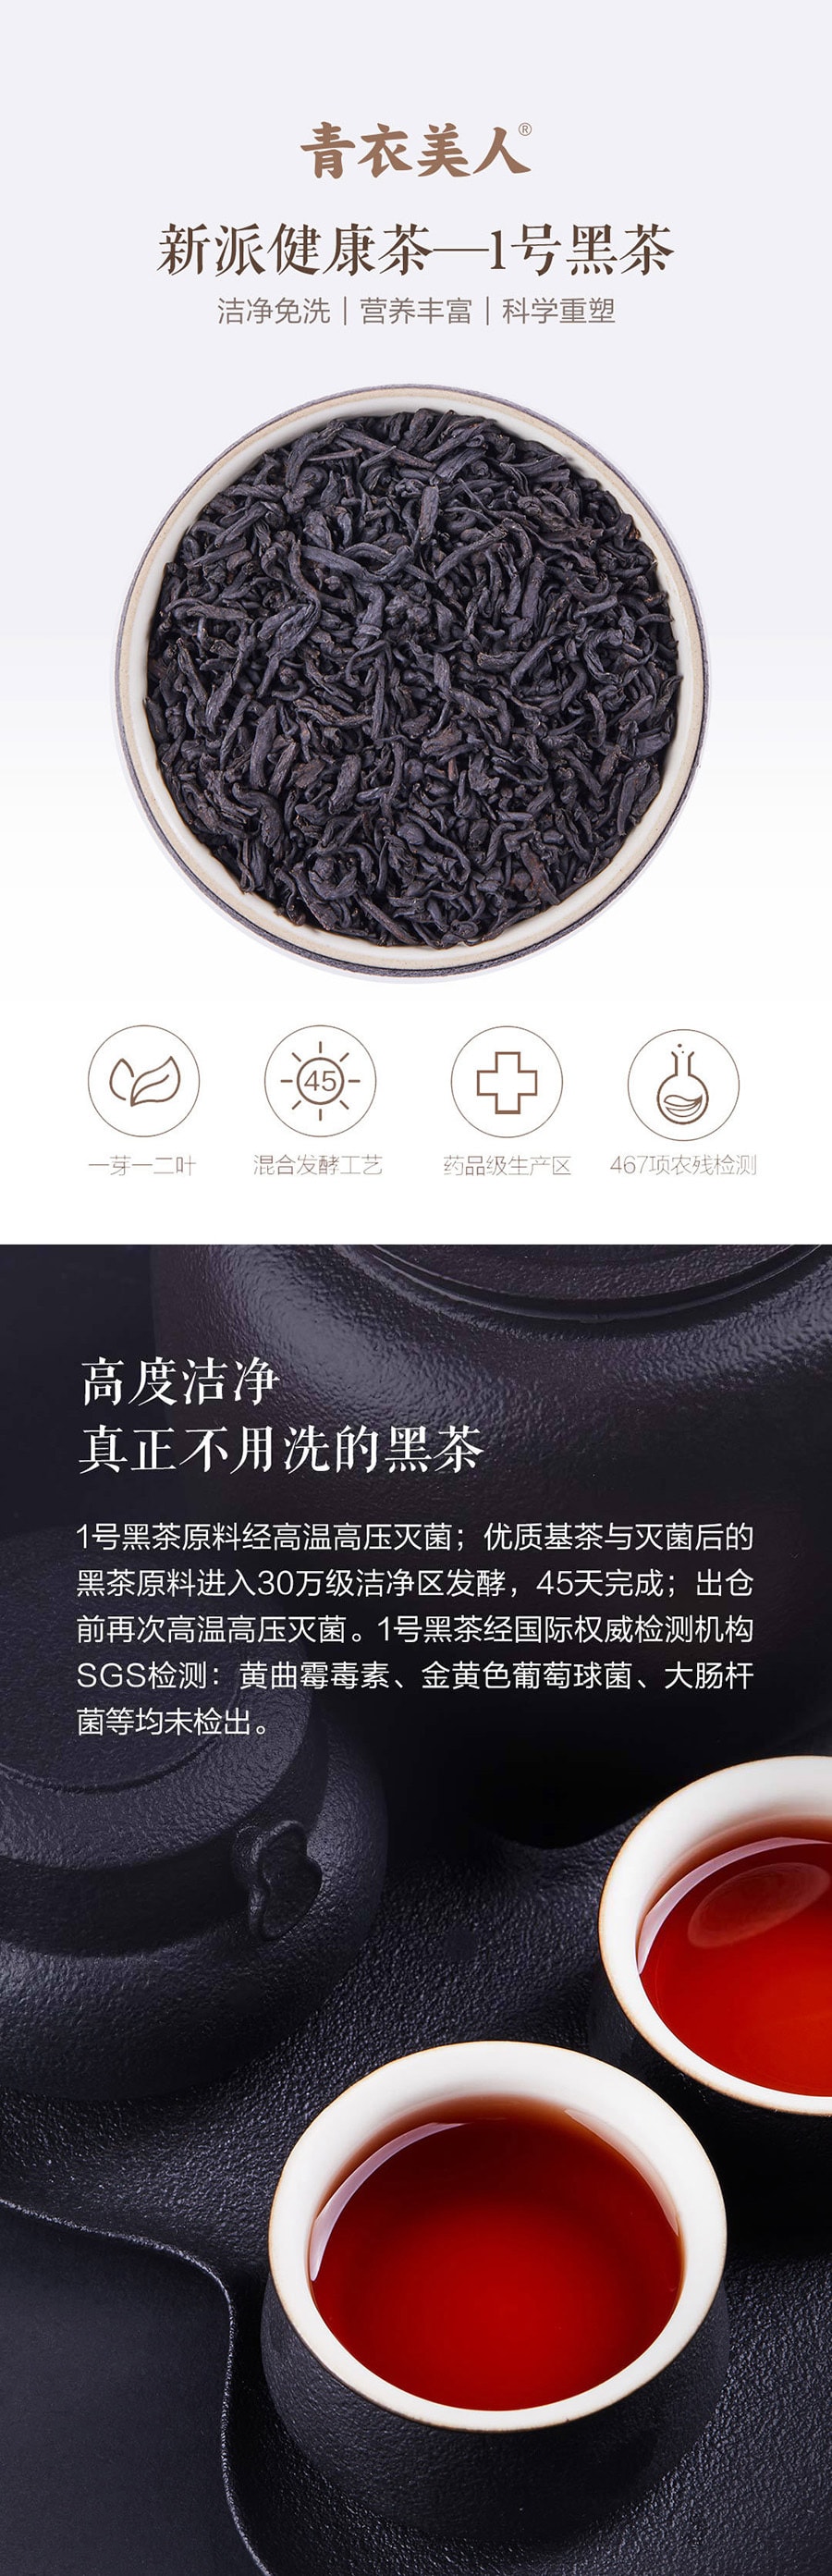 XIAOMI YOUPIN TSING-Yi BEAUTY IMPRESSION LANDSCAPE SERIES · No. 1 Black Tea 108g